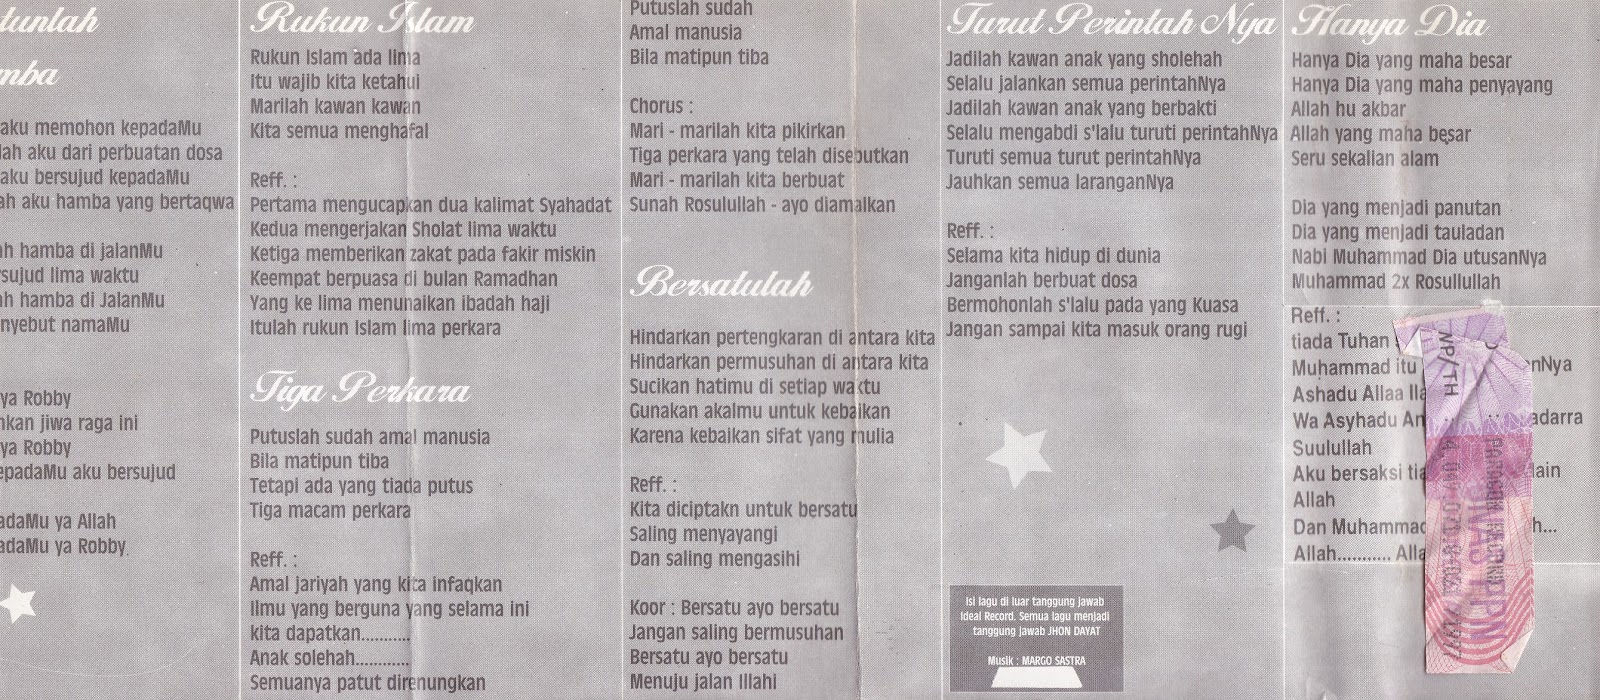 Sampul Kaset Album Lagu Anak Indonesia Jaman Dulu: Dhea Ananda